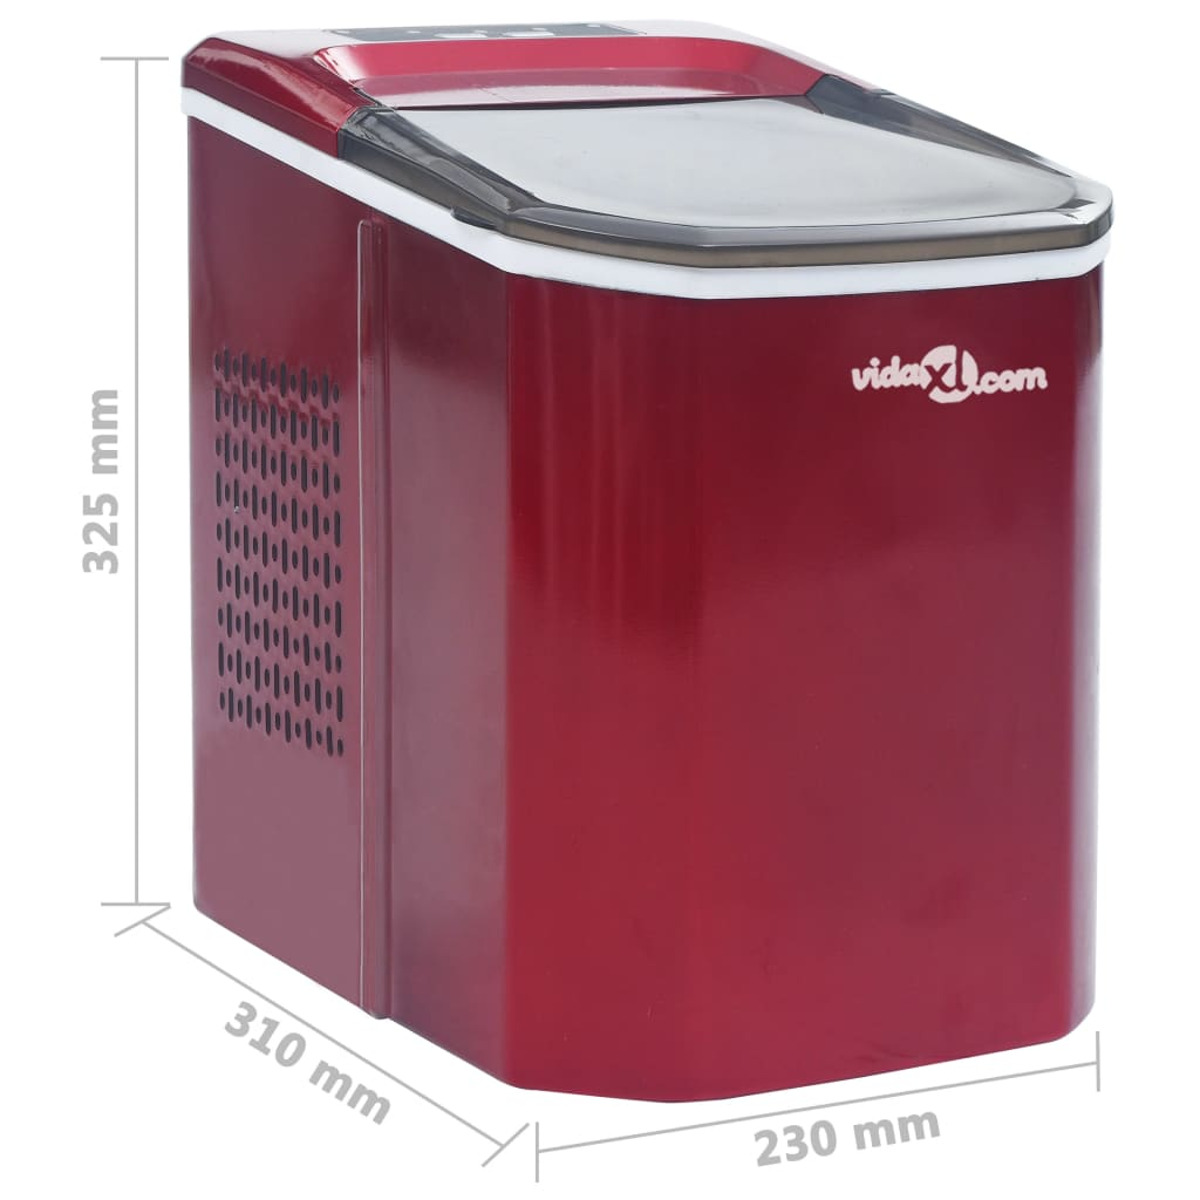 VIDAXL 51099 Eiswürfelmaschine Rot) (112 Watt